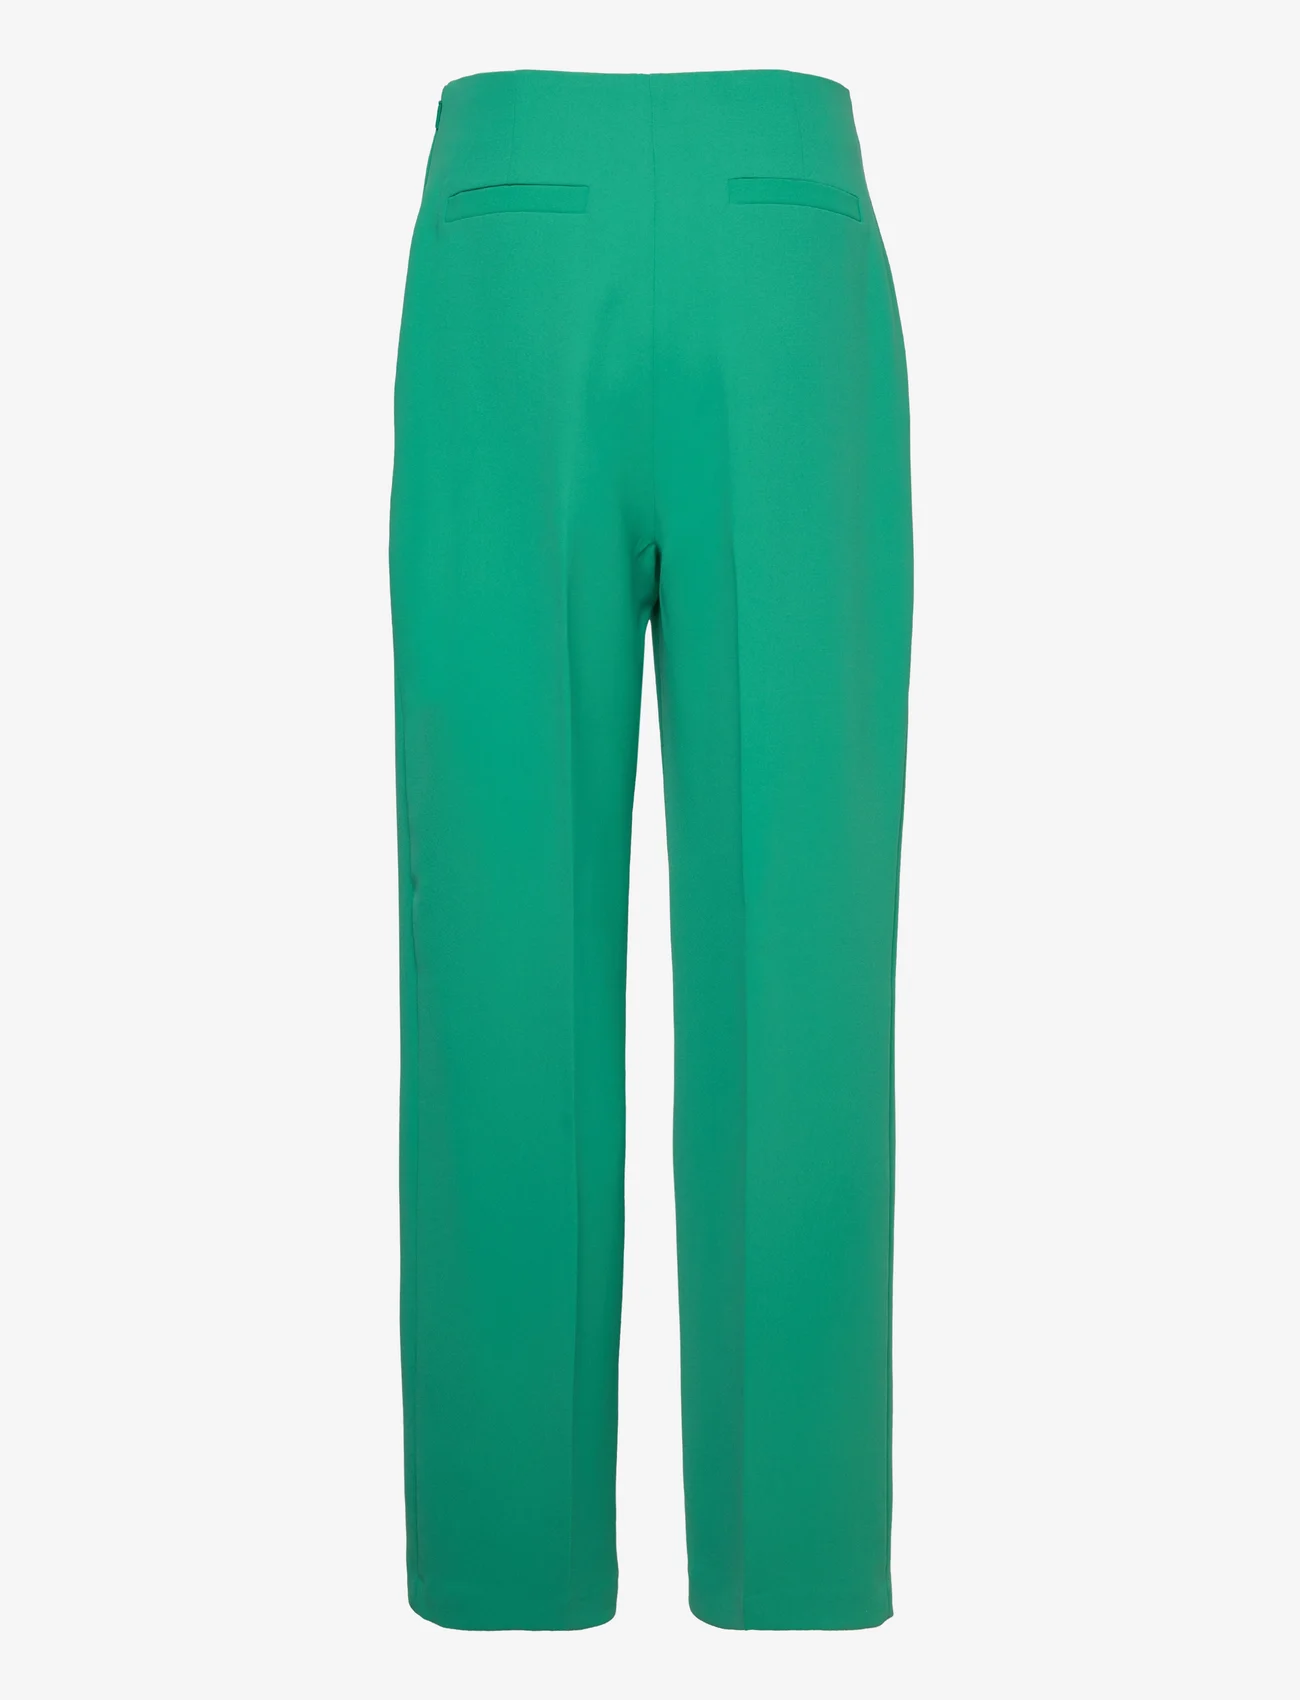 Ted Baker London - LLAYLAT - wide leg trousers - 34 green - 1